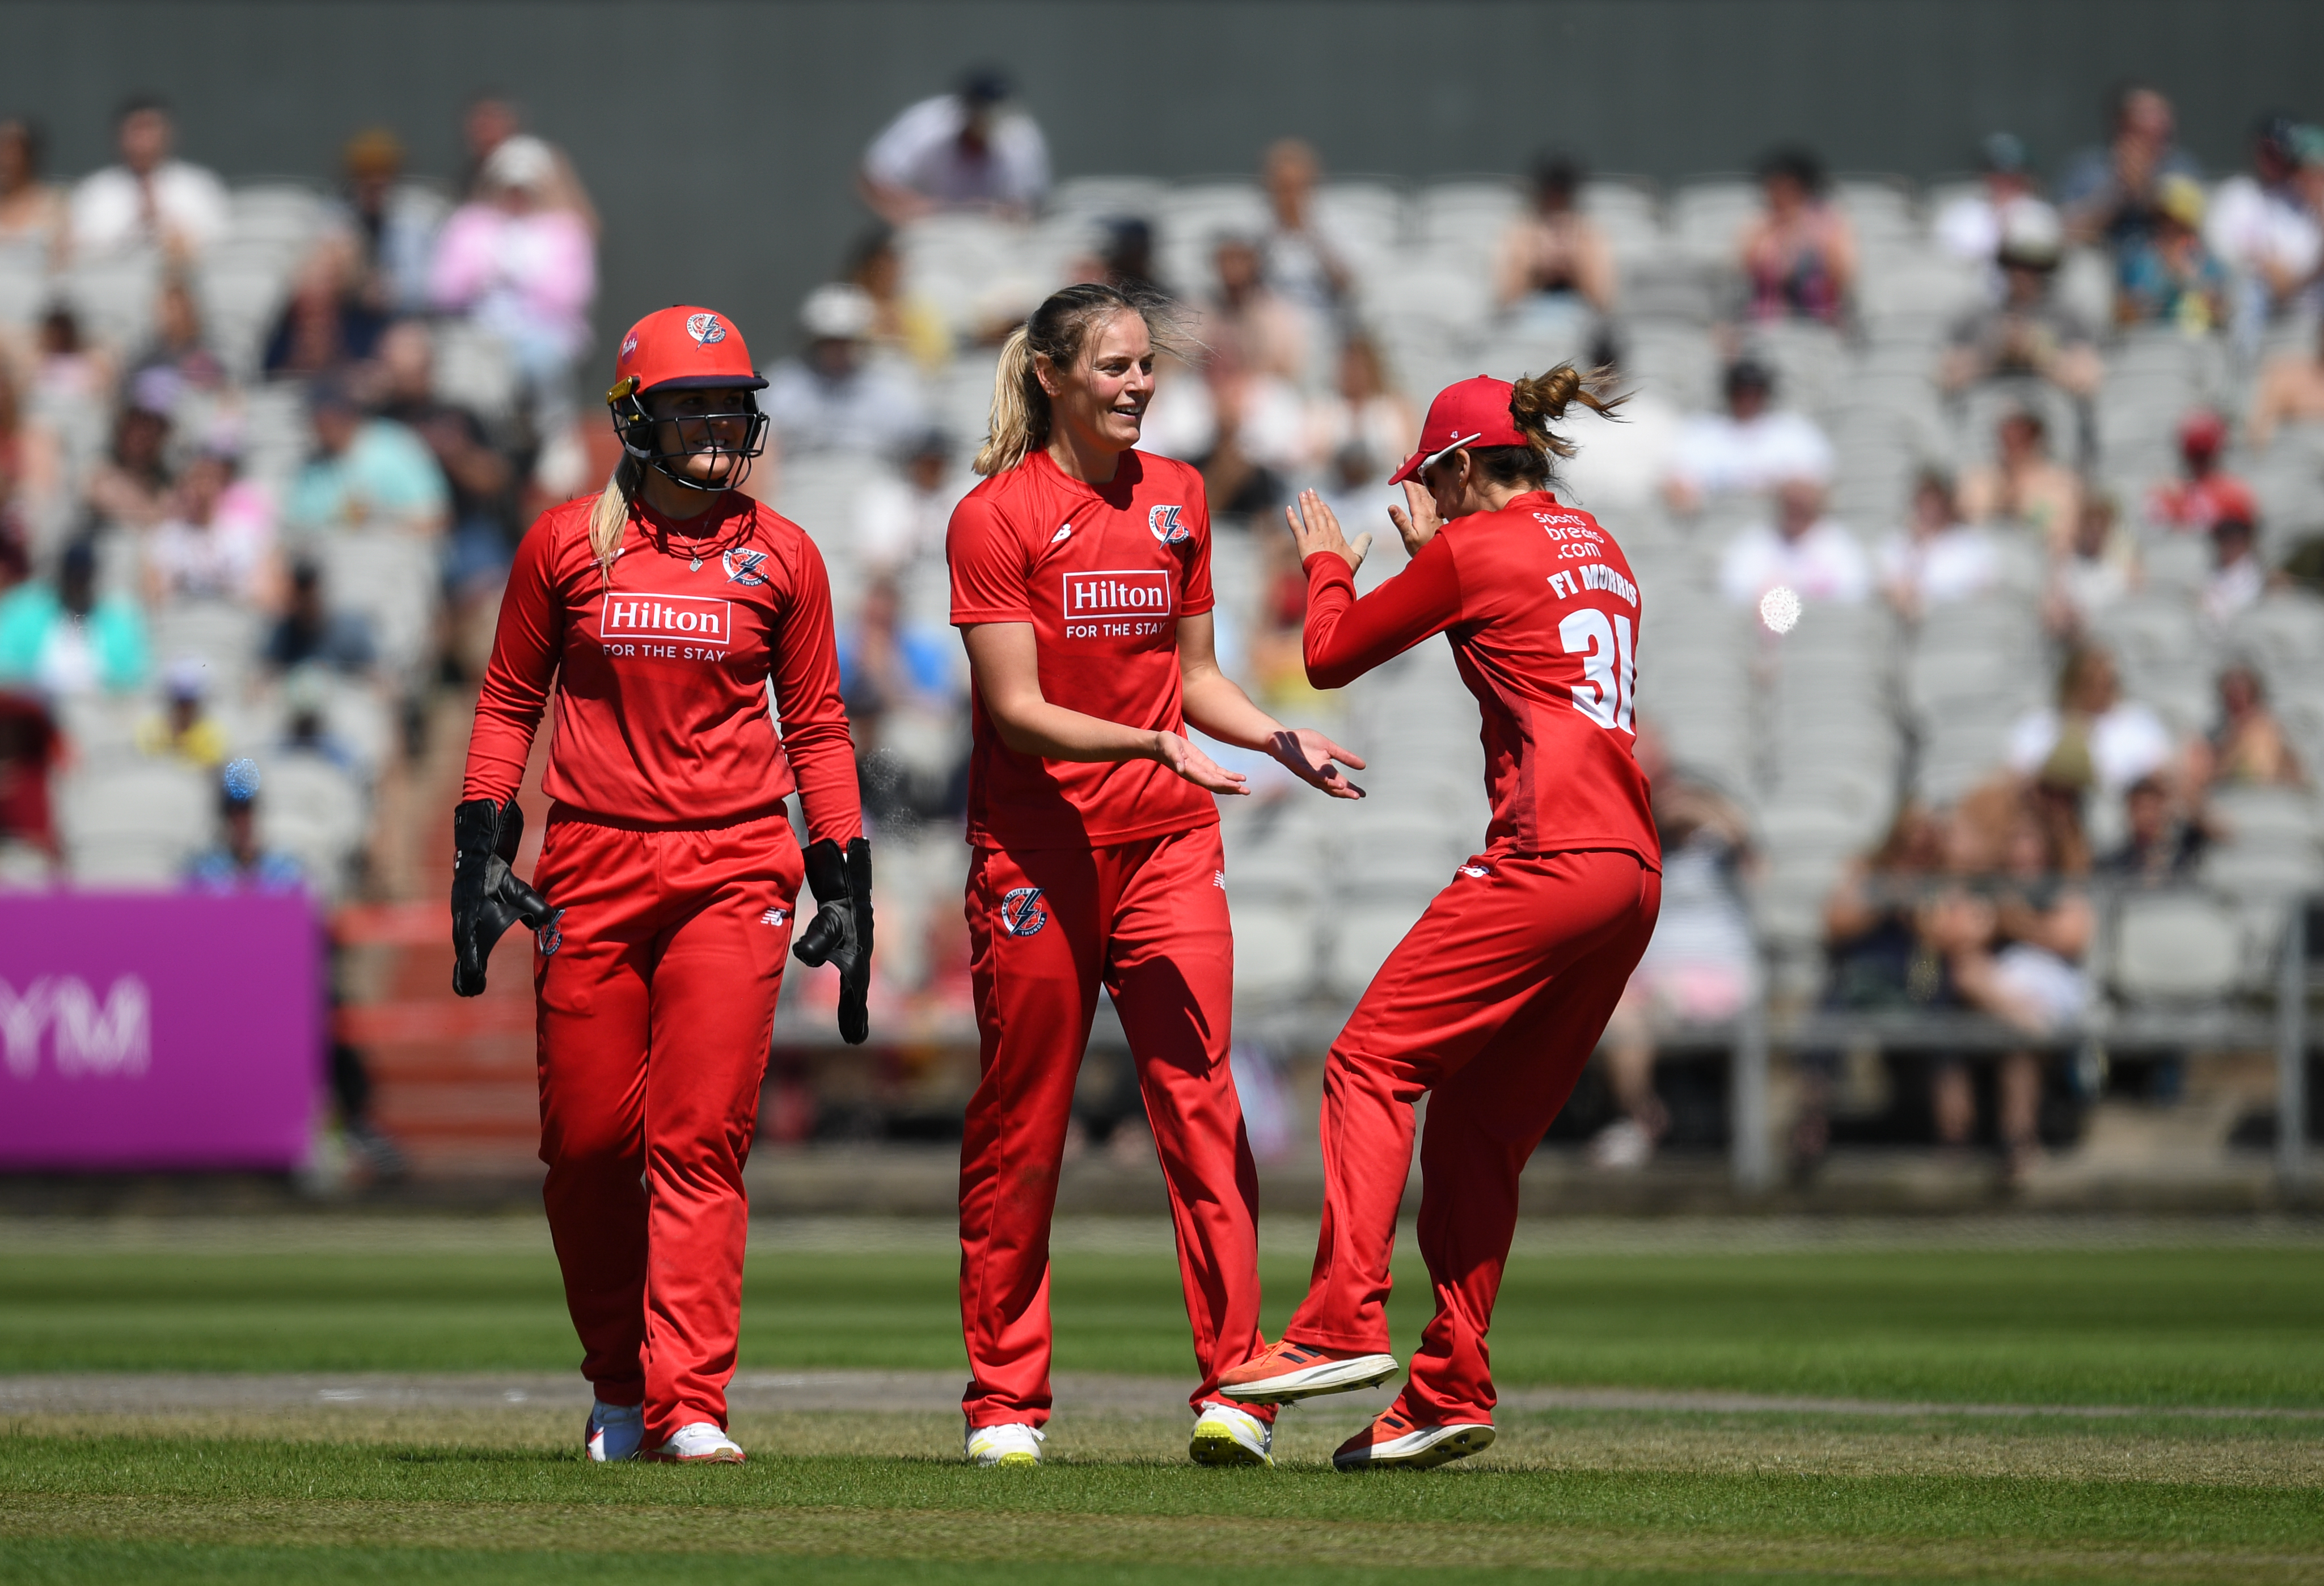 Phoebe Graham Celebrates Her First Wicket